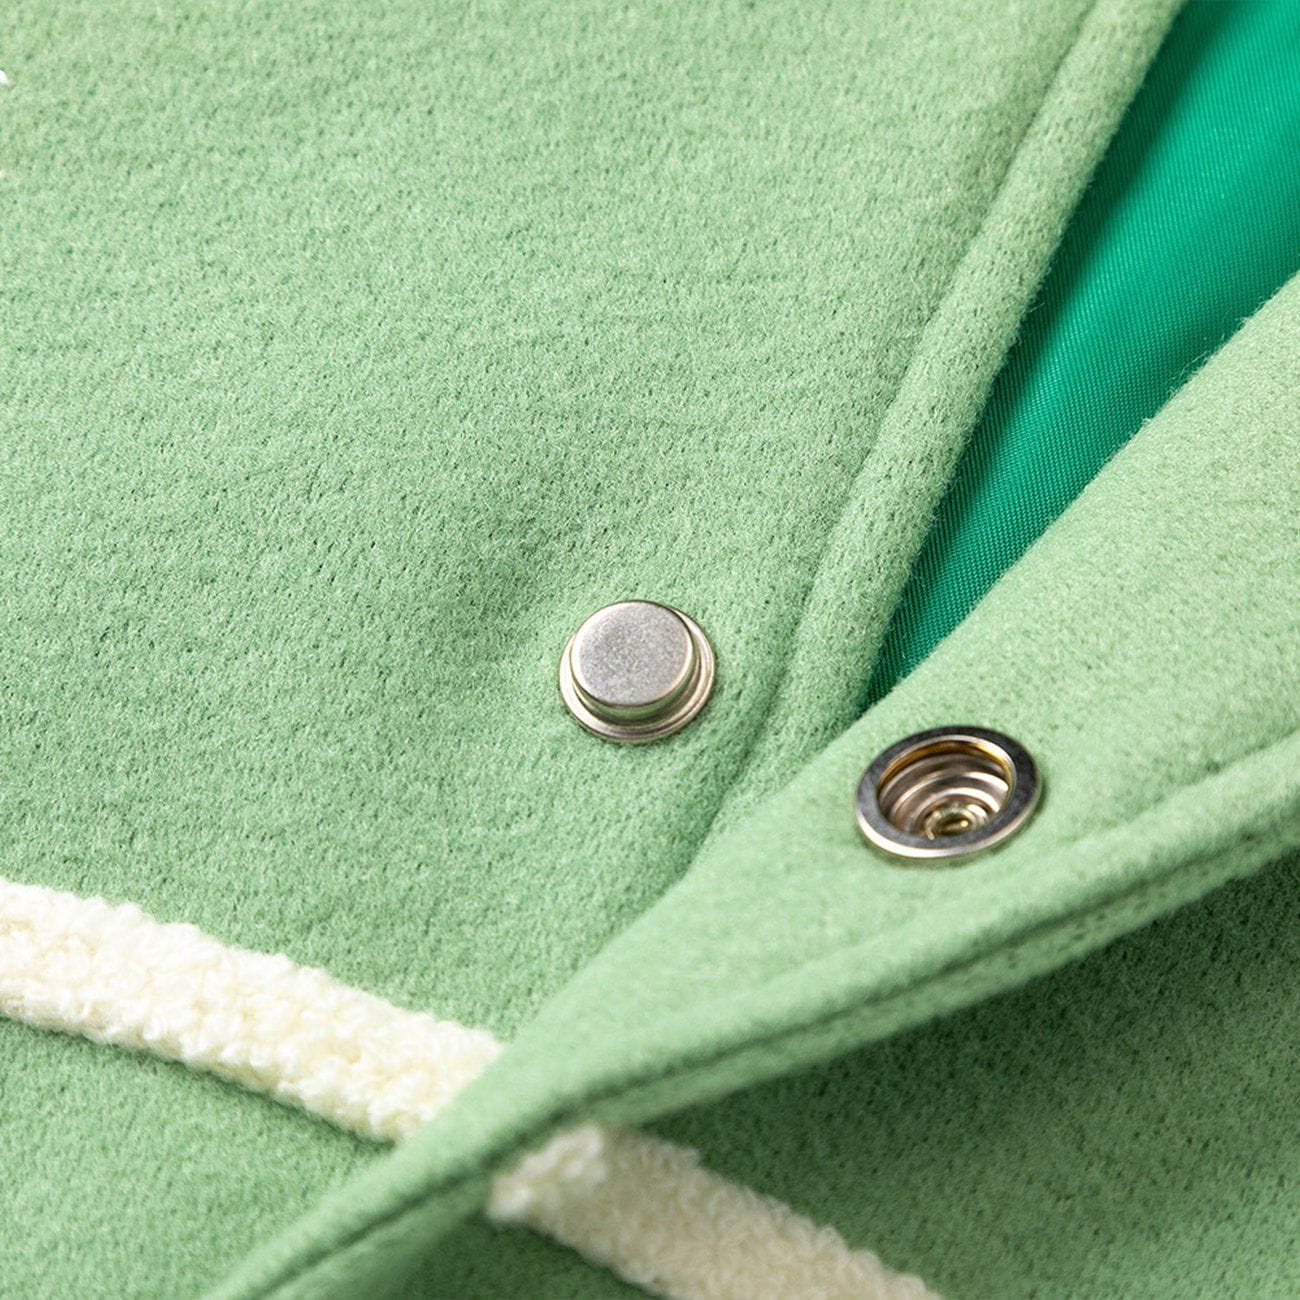 Majesda® - Towel Embroidered Letters Varsity Jacket outfit ideas, streetwear fashion - majesda.com